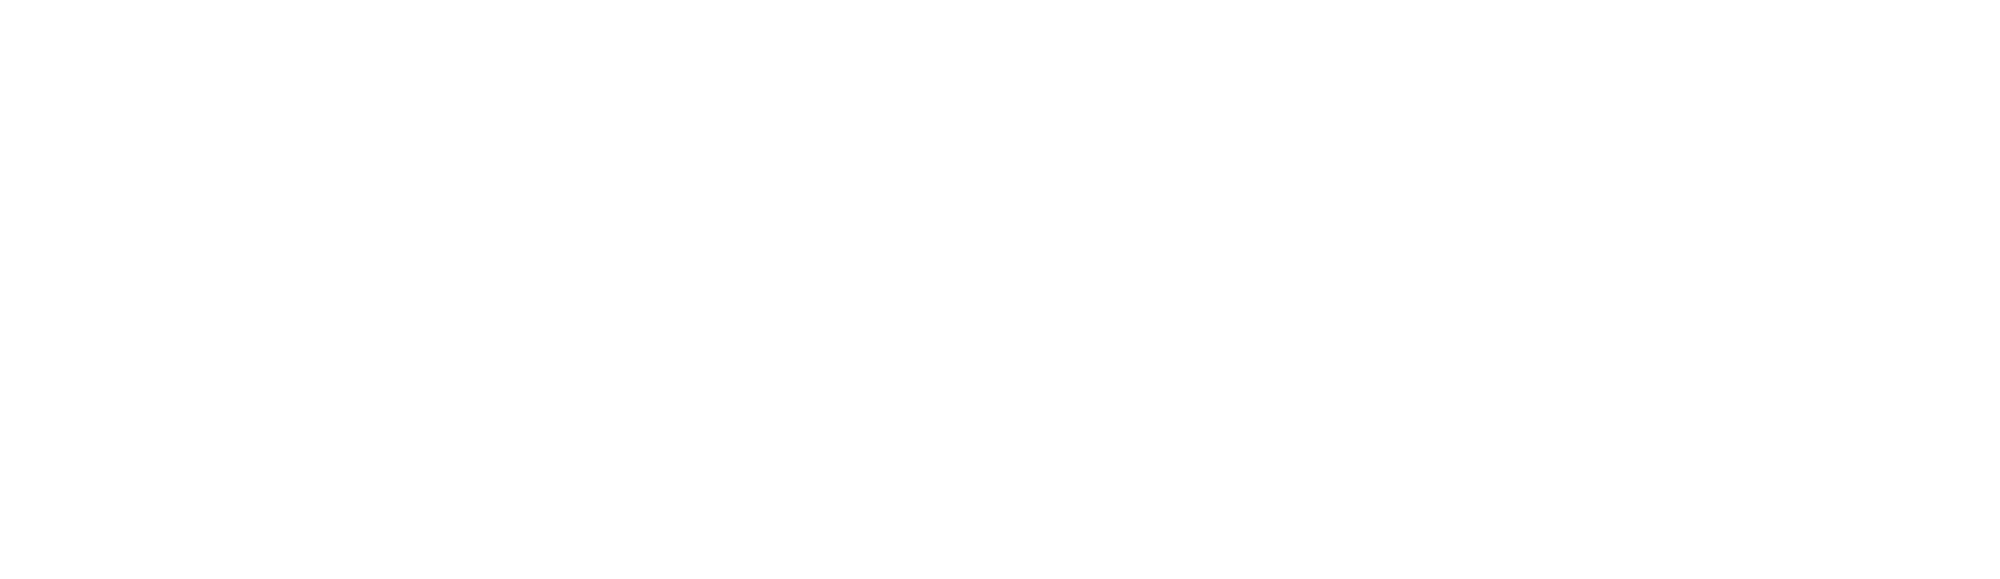 Final Fantasy logo PNG Image de fond